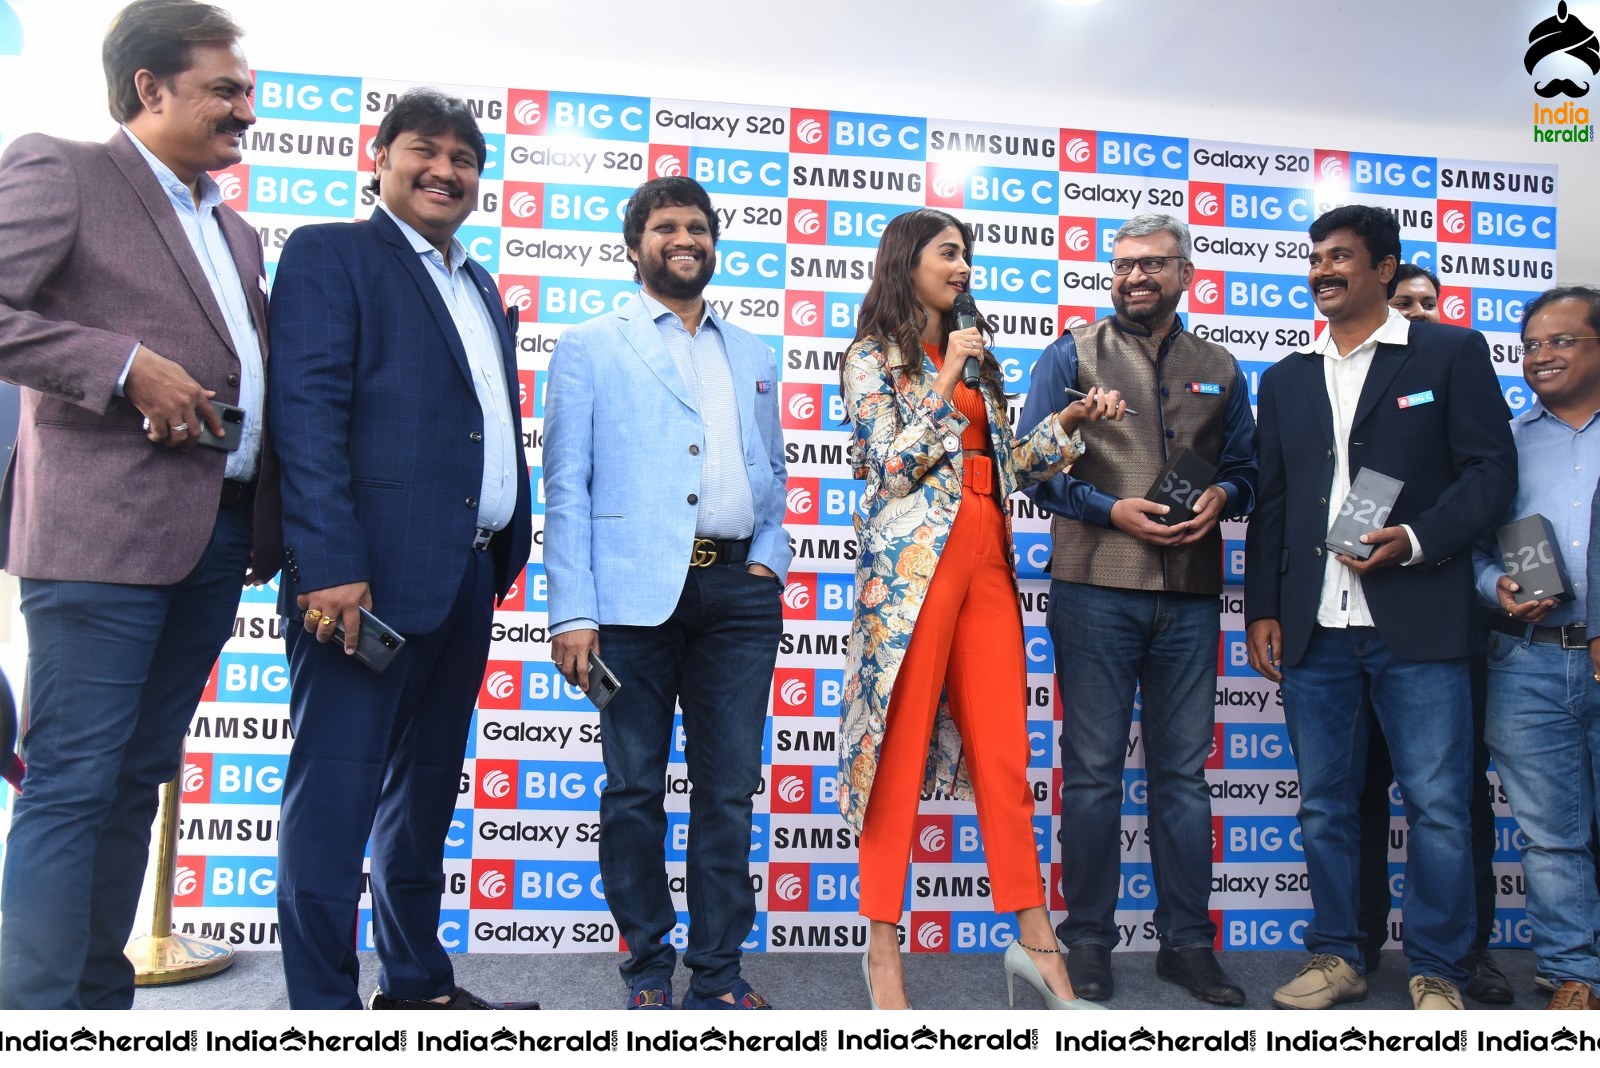 Pooja Hegde launches Samsung Galaxy S20 at Big C Madhapur Set 2